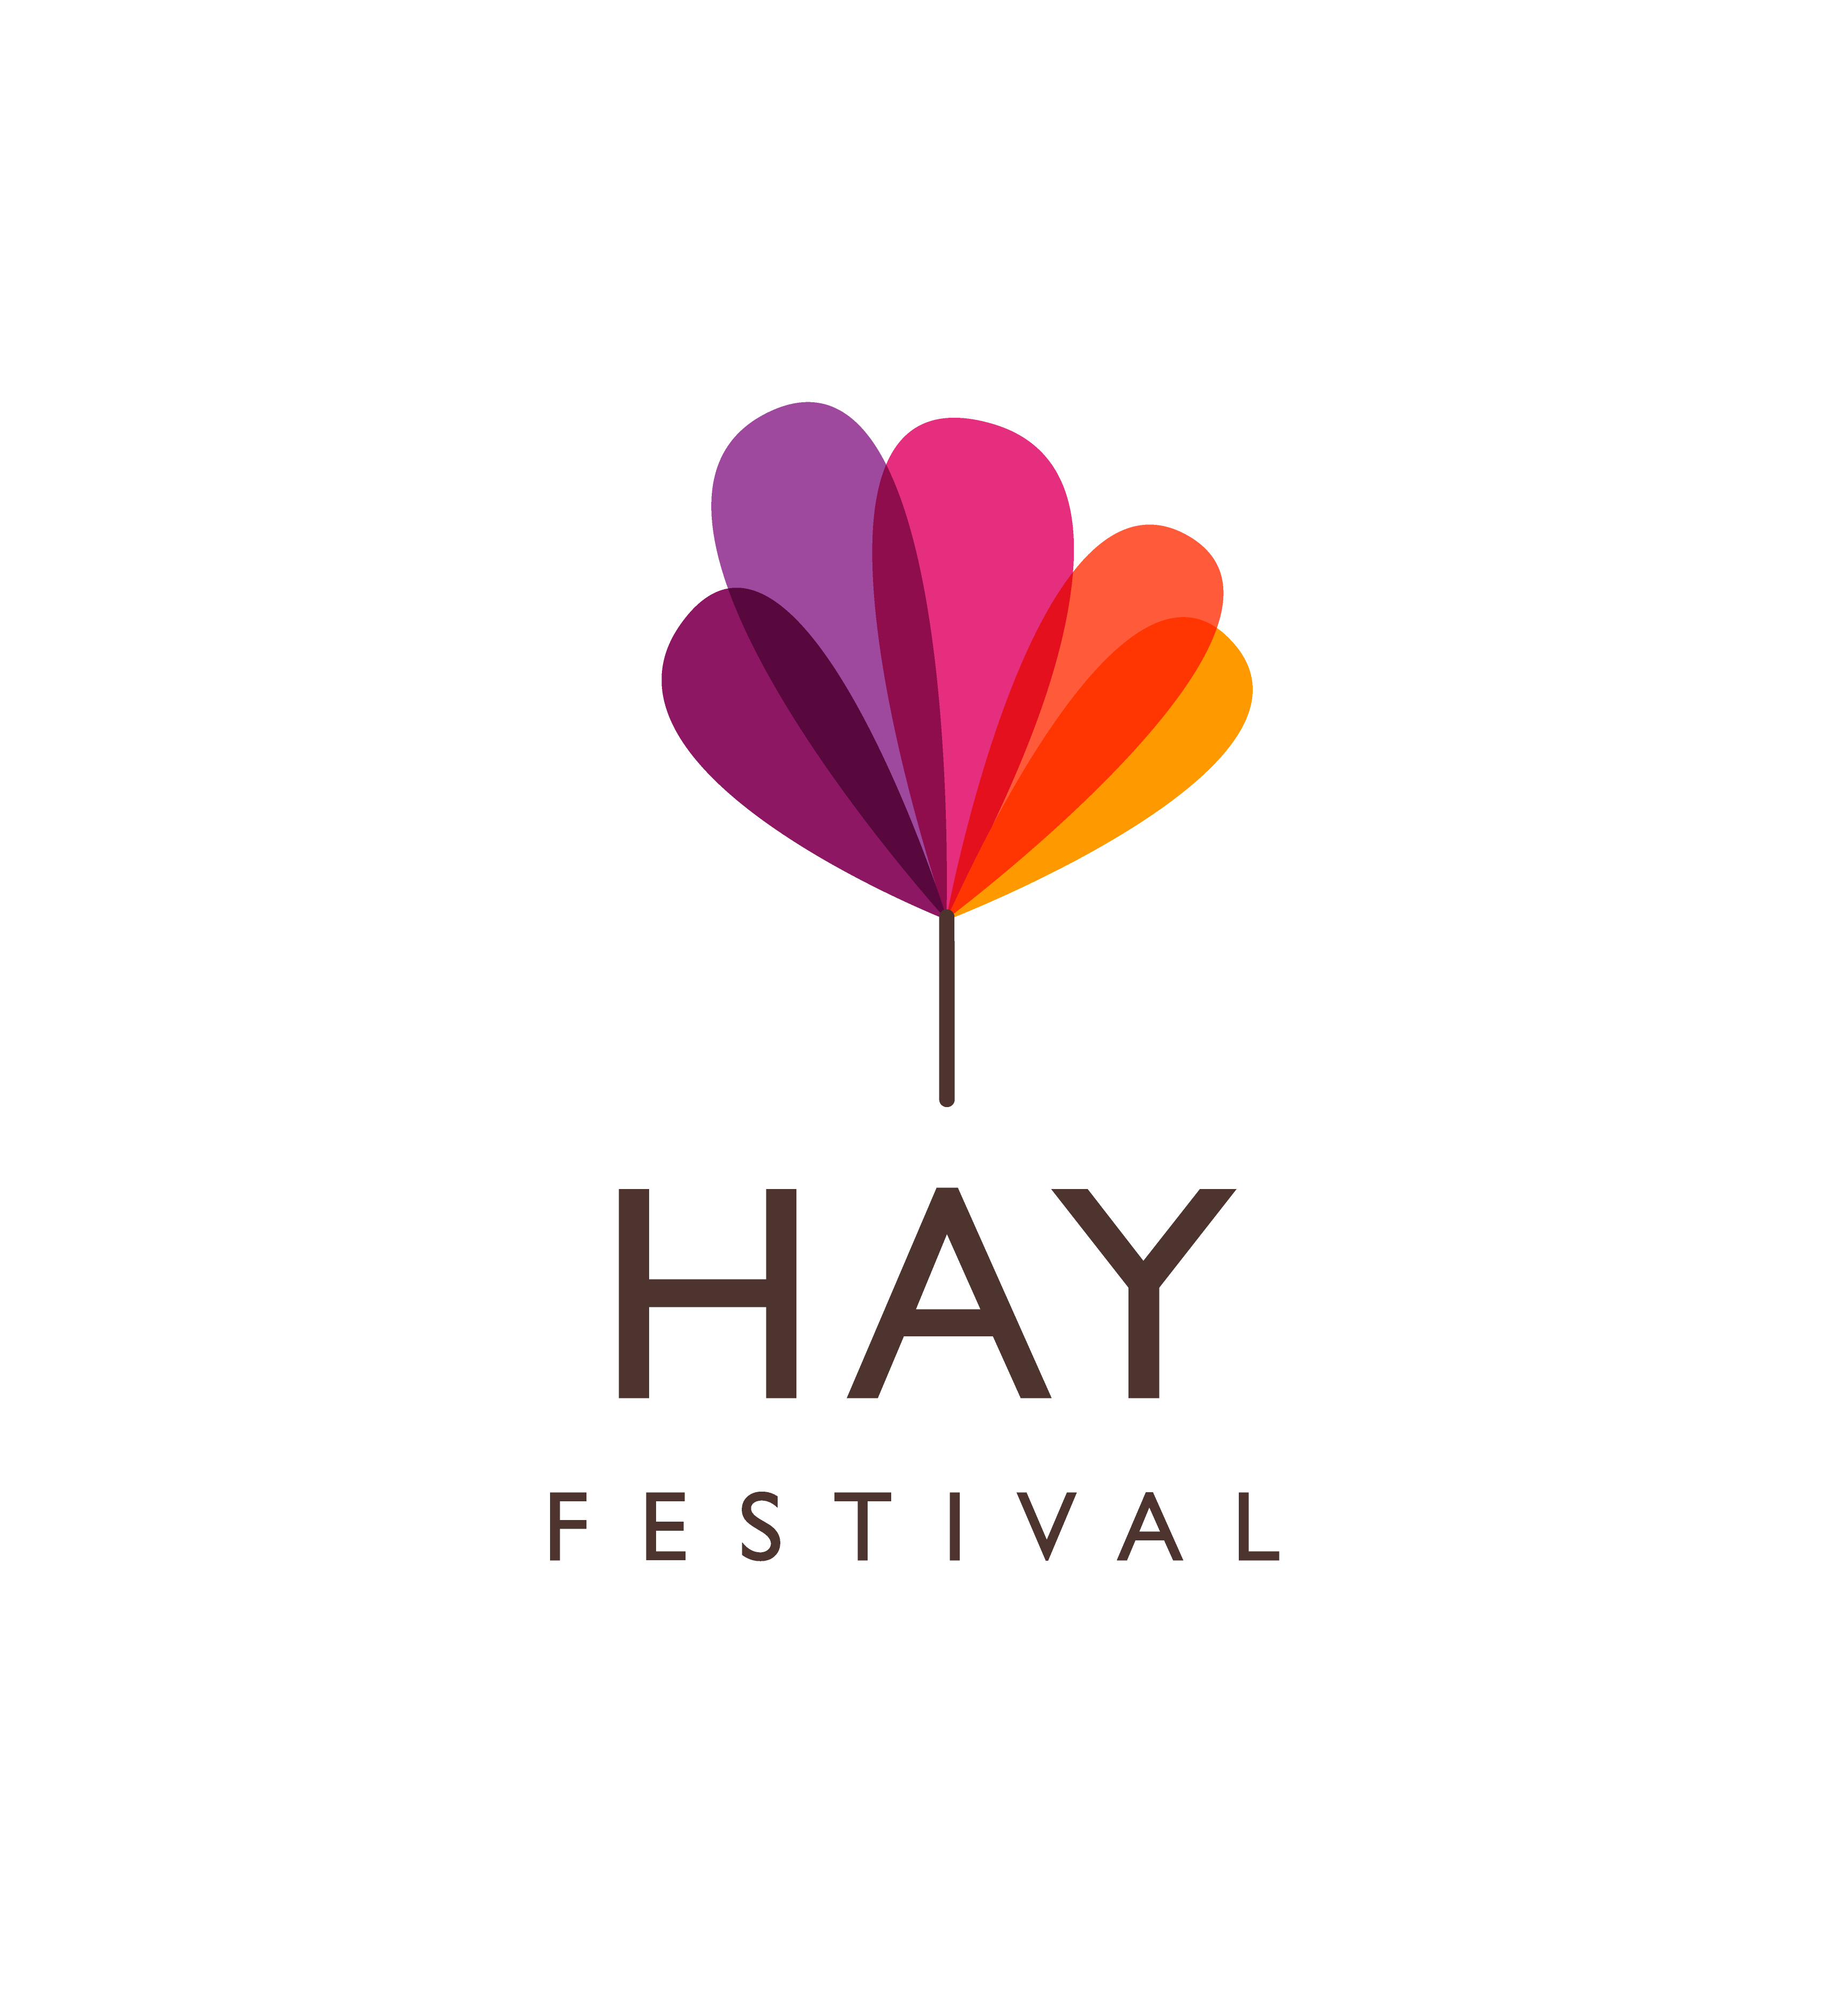 Hay Logo - Hay Festival Logos & Branding